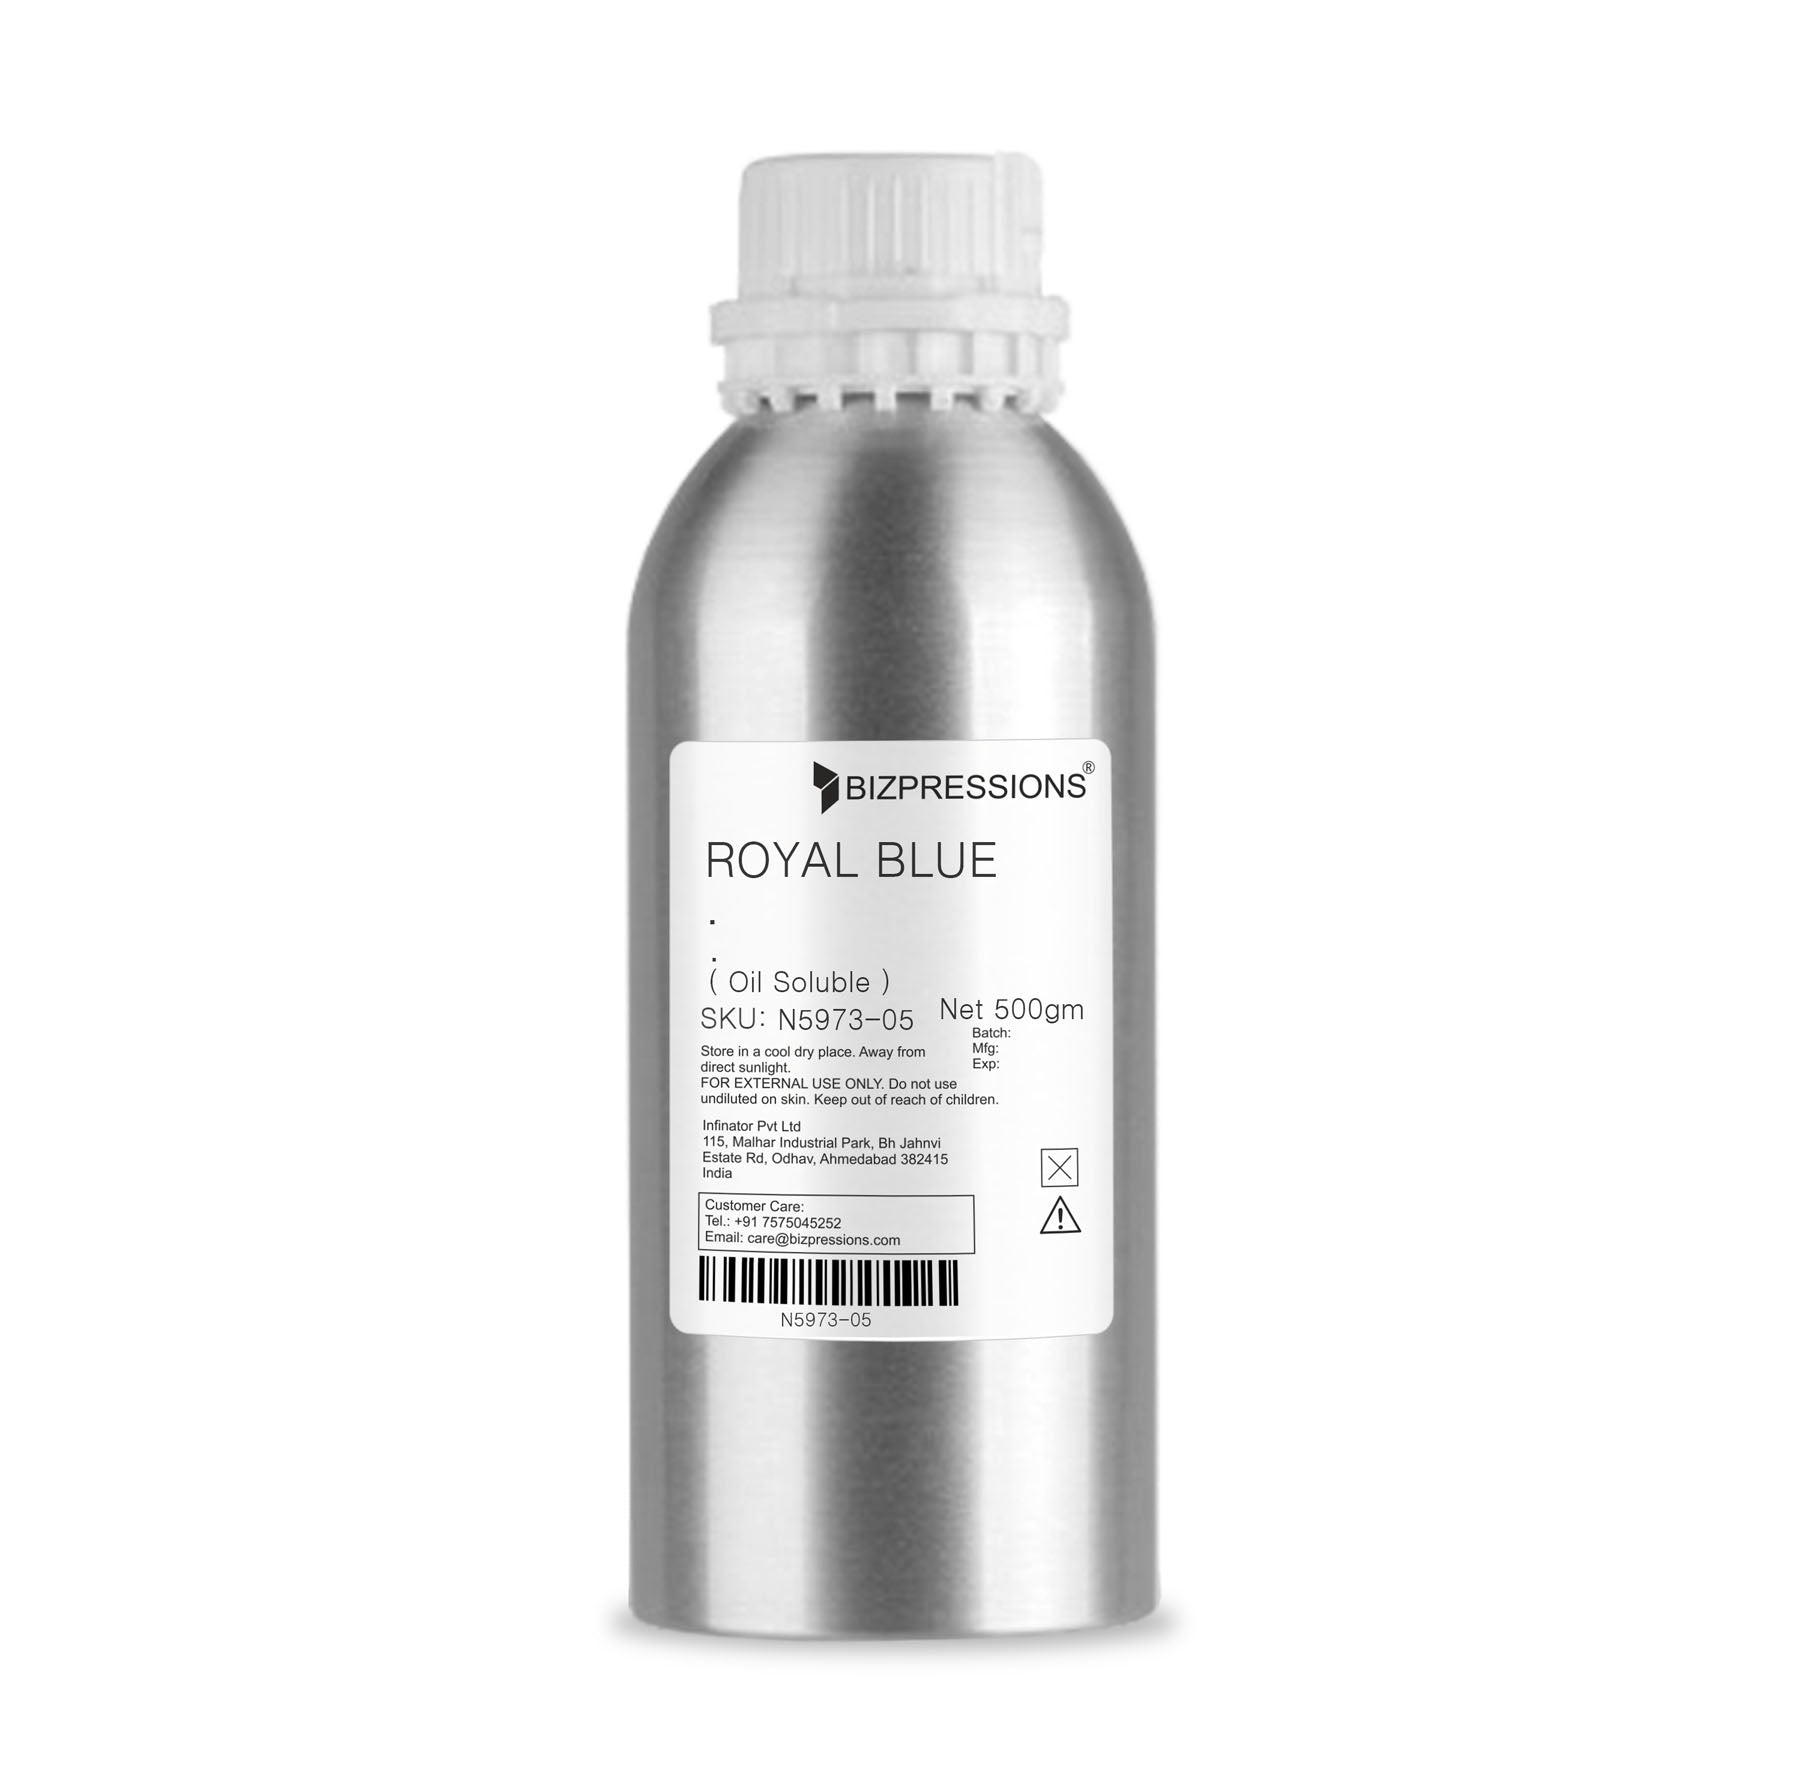 ROYAL BLUE - Fragrance ( Oil Soluble ) - 500 gm